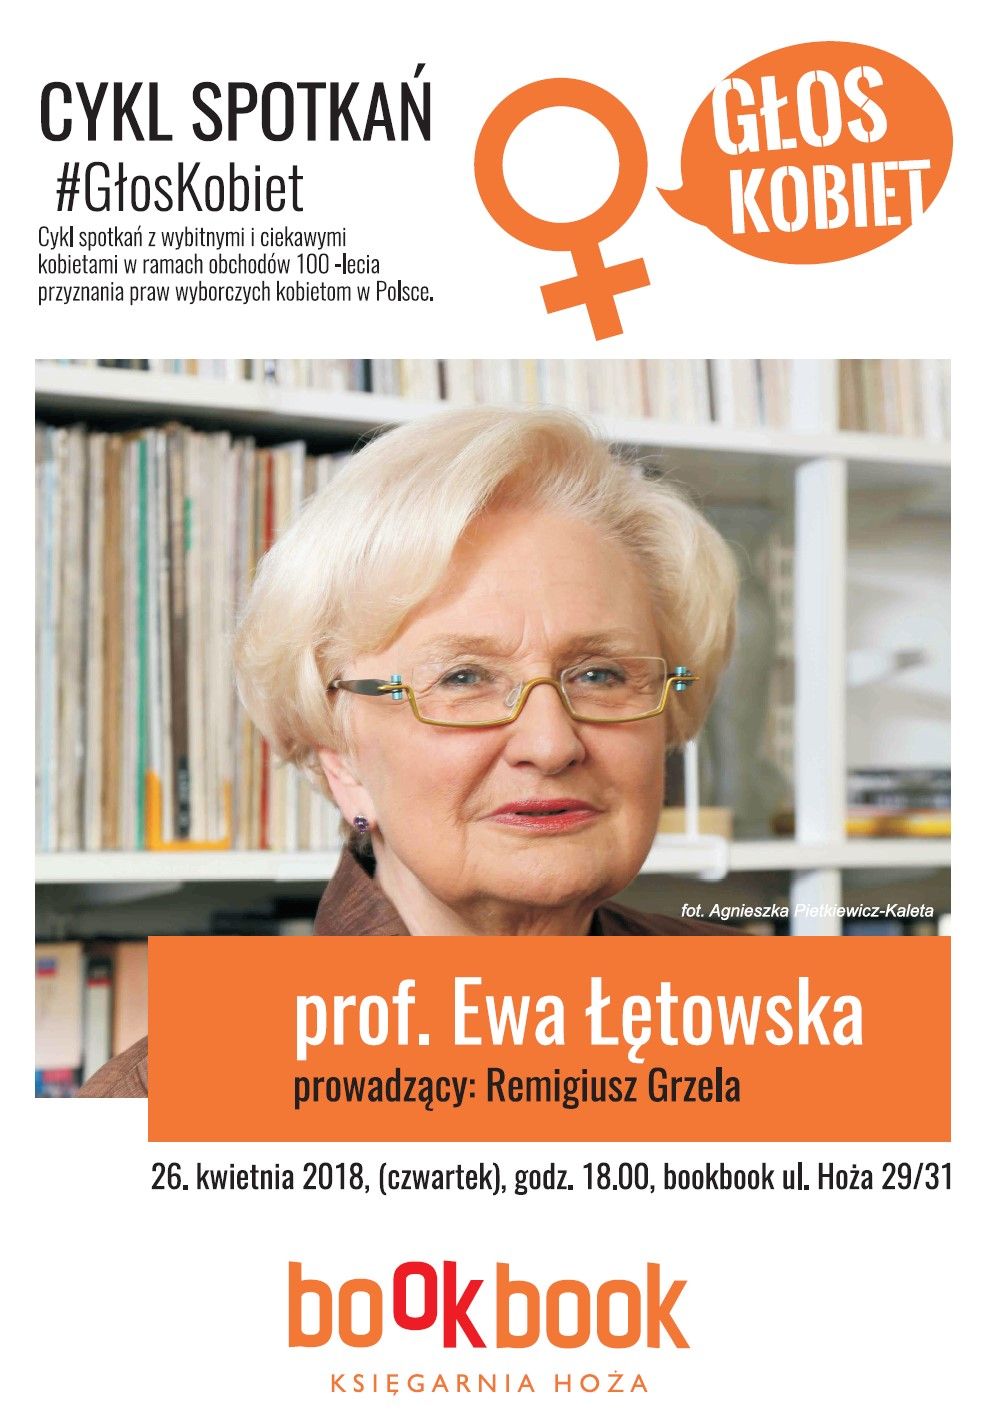  GłosKobiet, prof. Ewa Łętowska, BookBook,